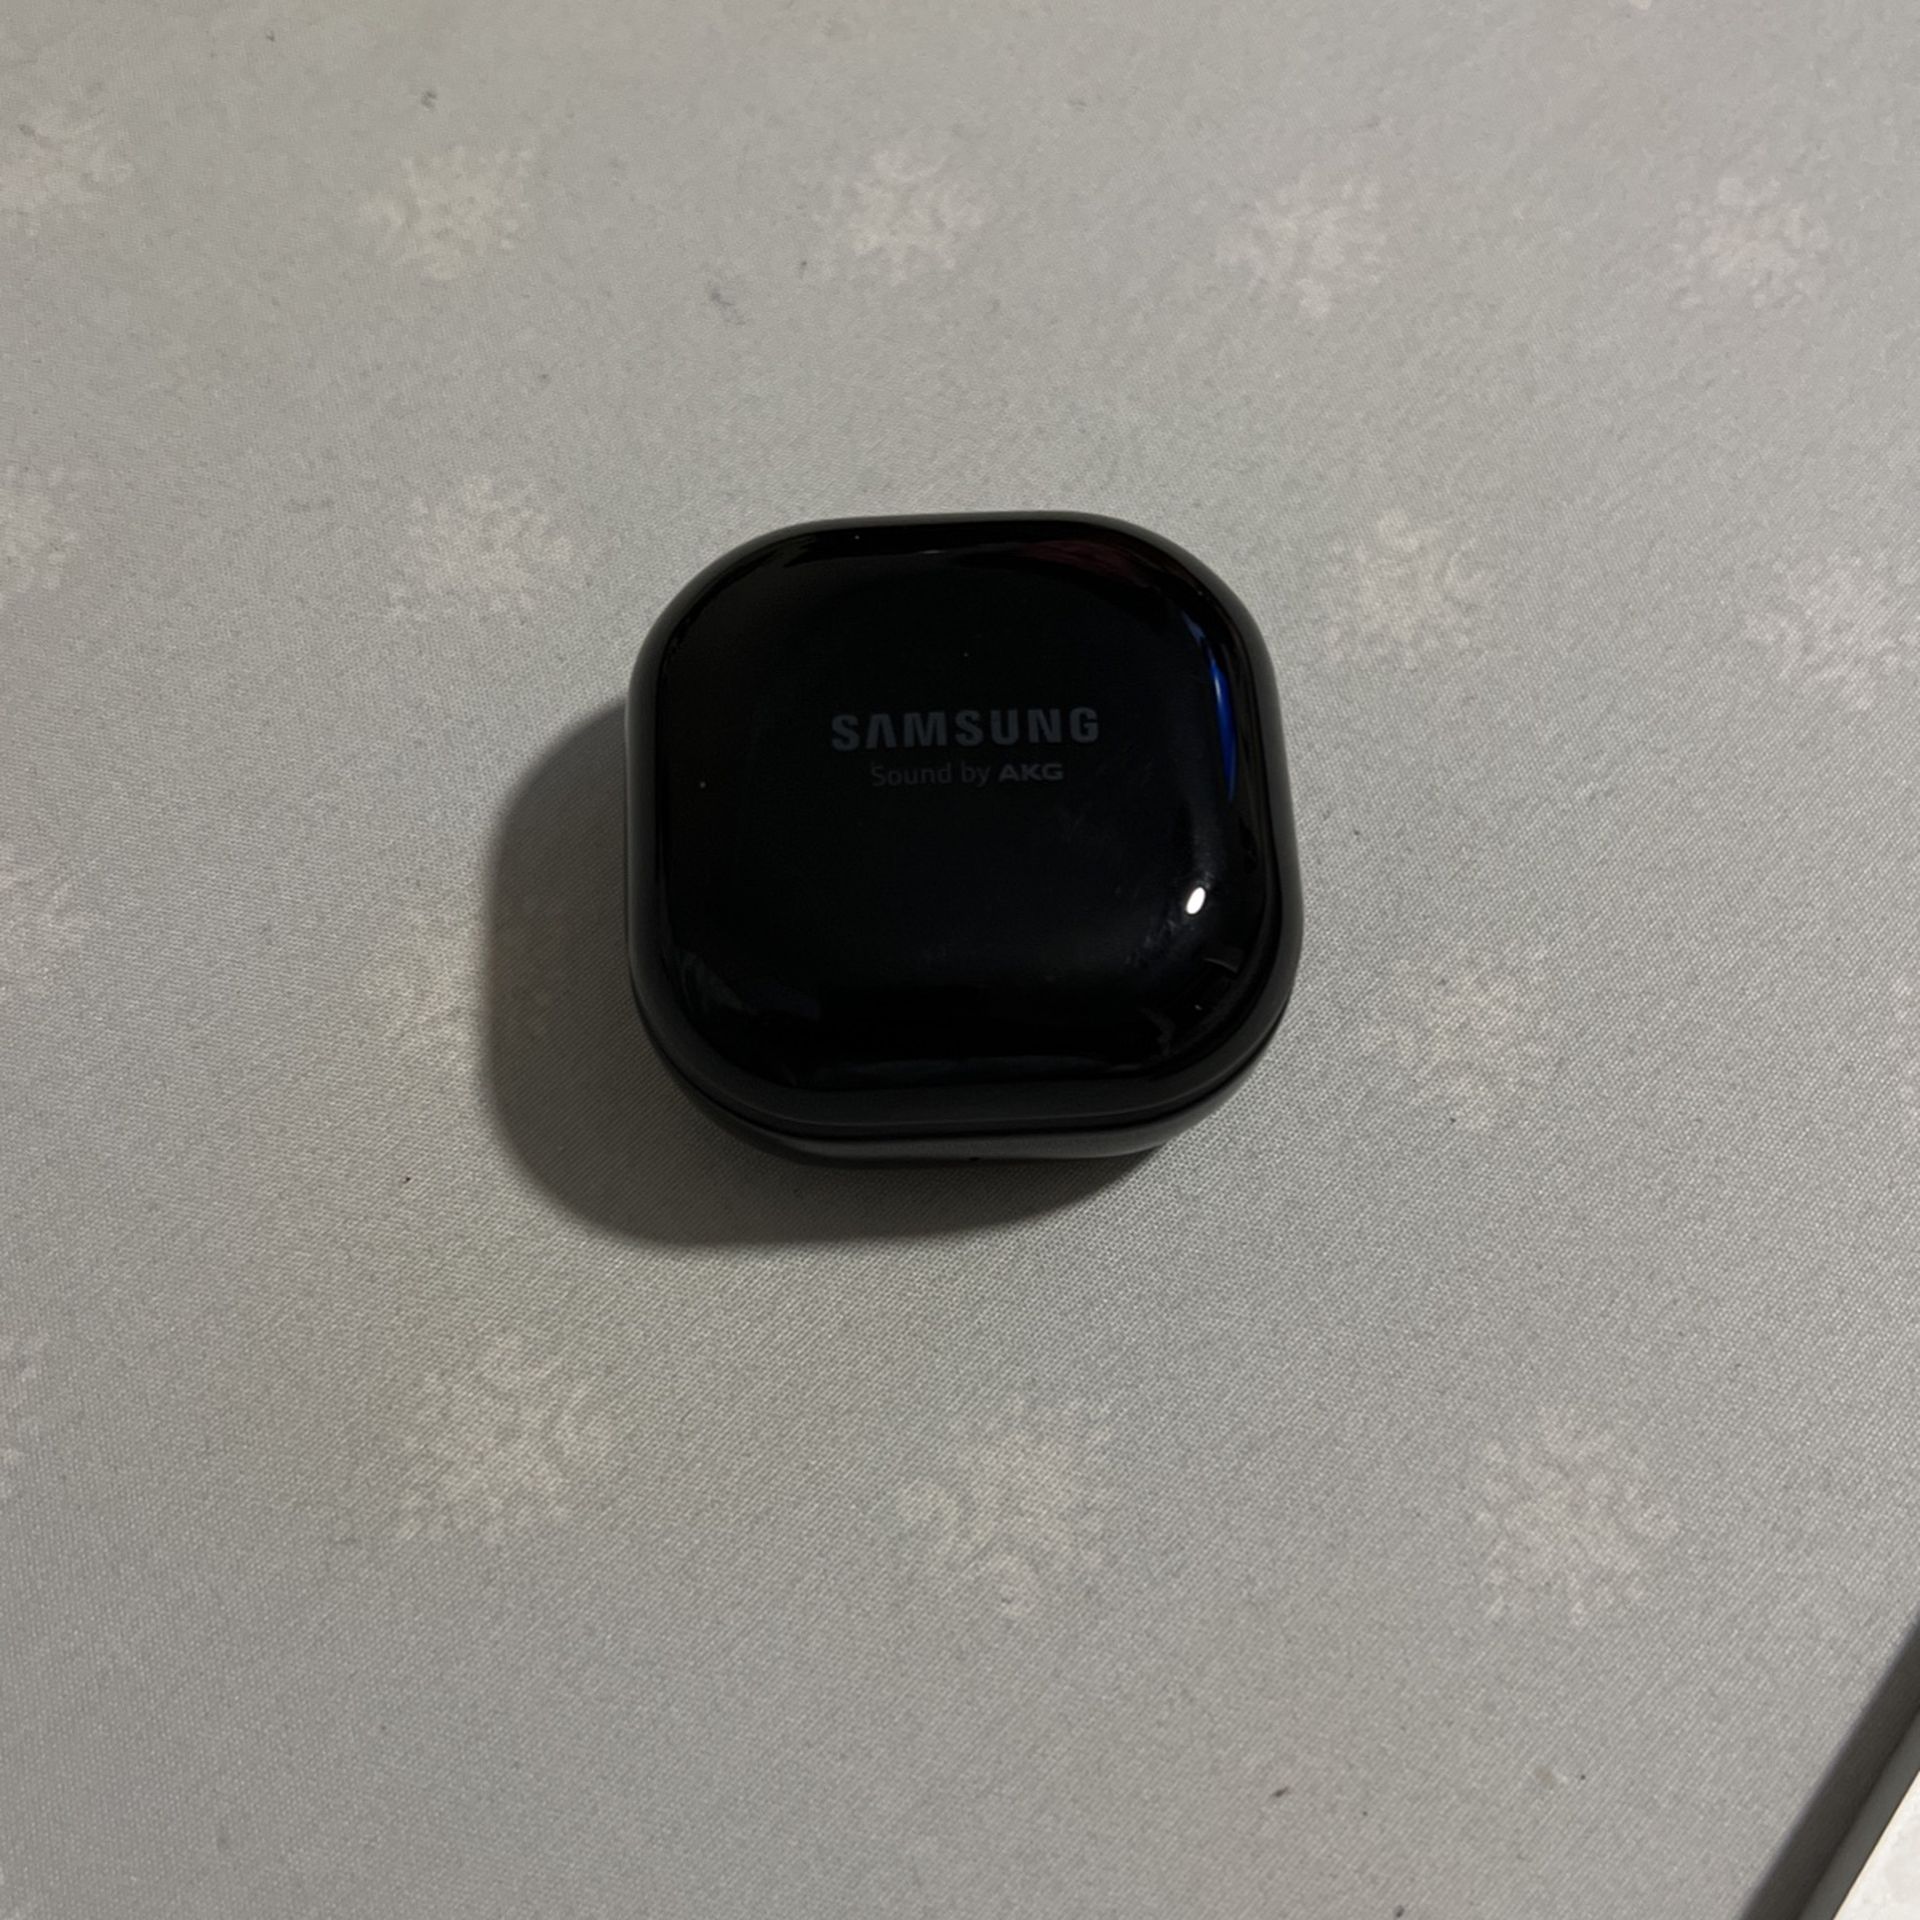 Samsung Galaxy buds